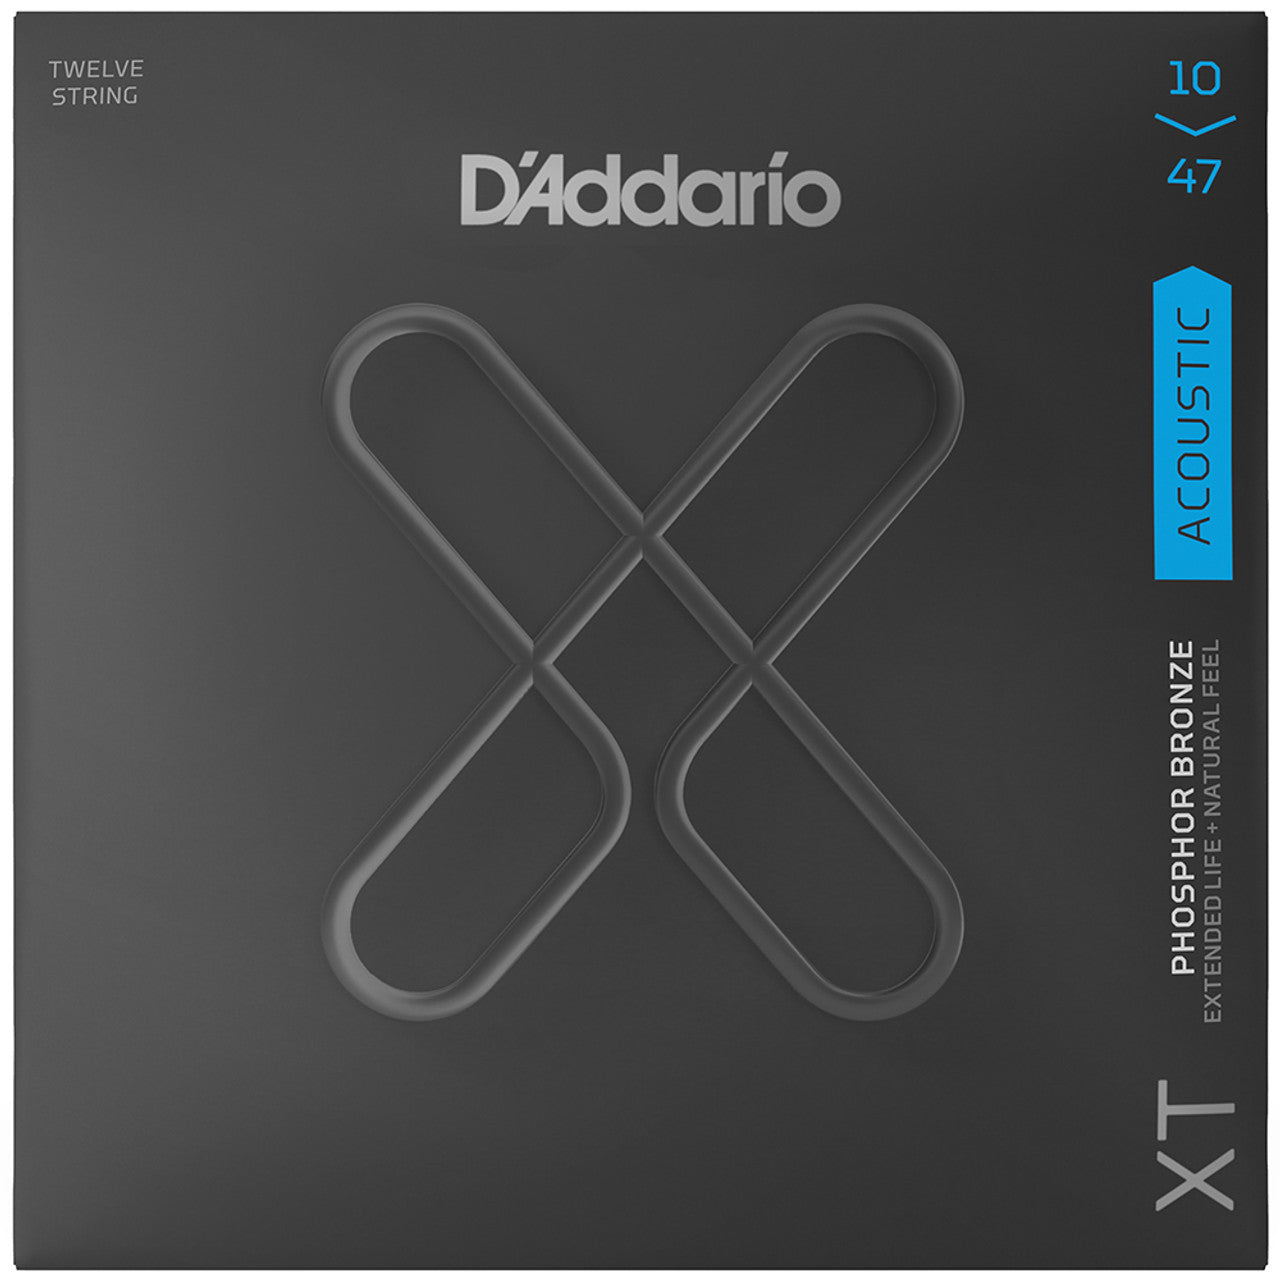 D’Addario XT 12 String Acoustic Phosphor Bronze Light 10-47